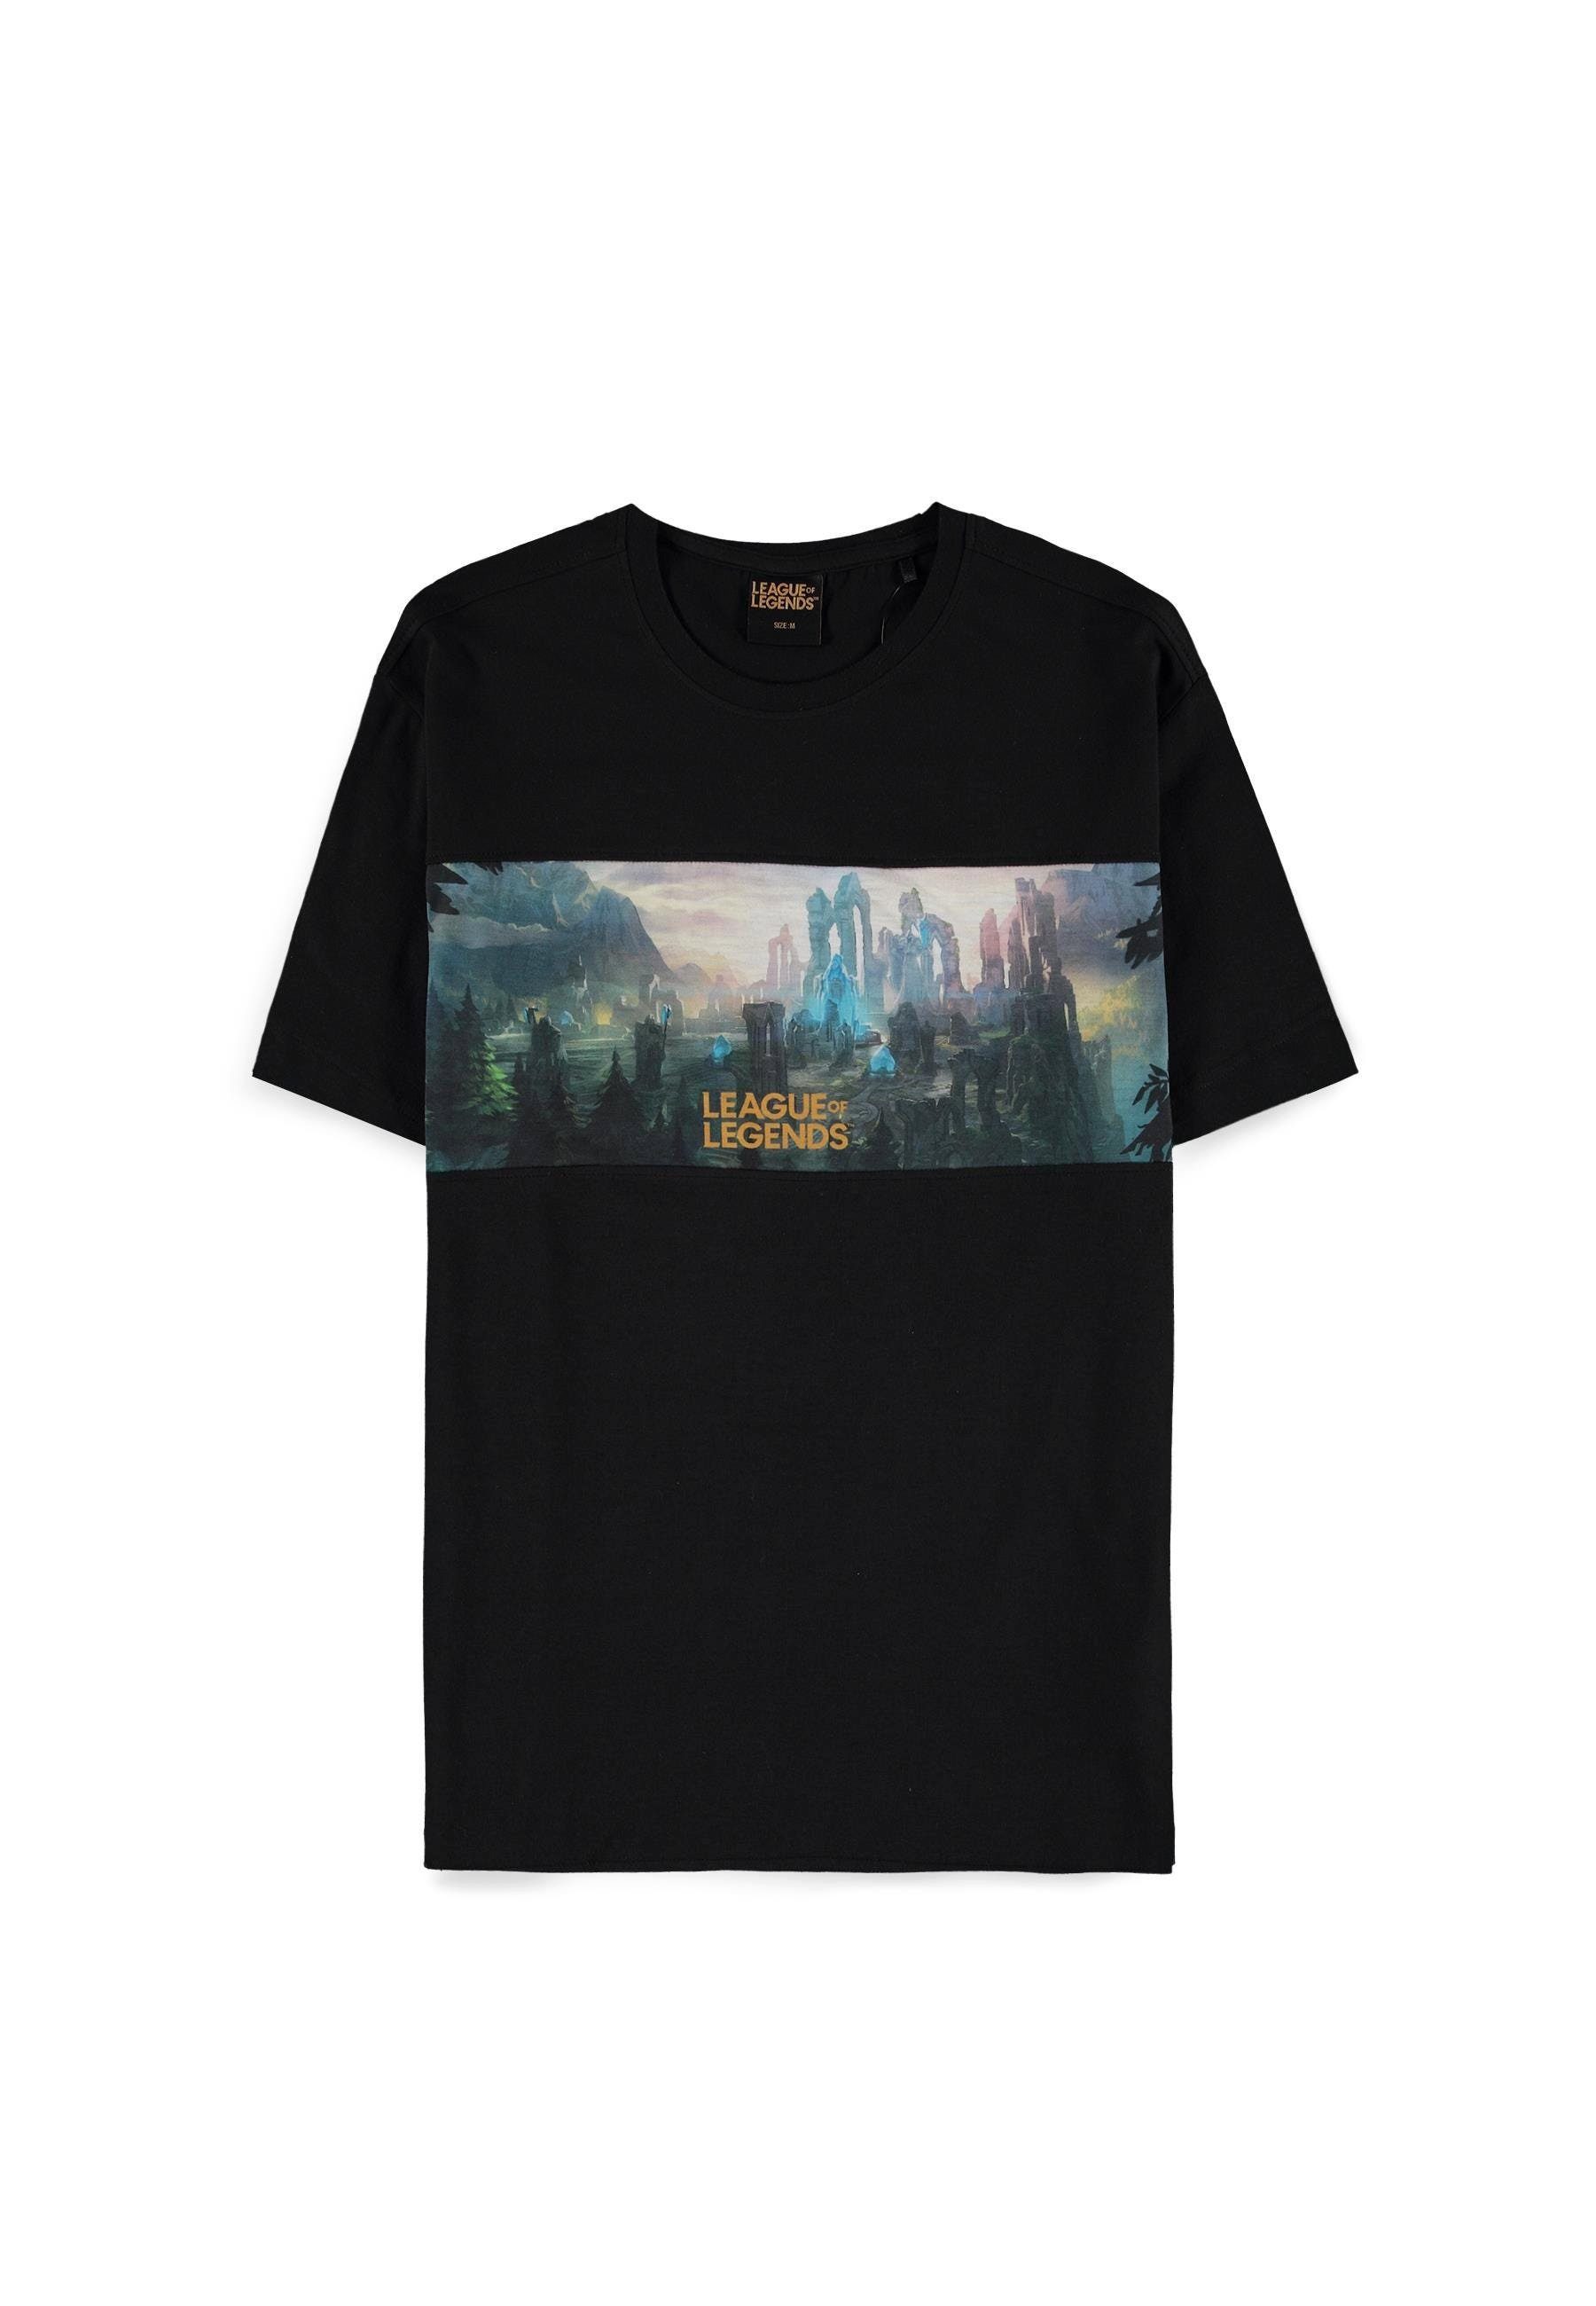 League of Legends T-Shirt